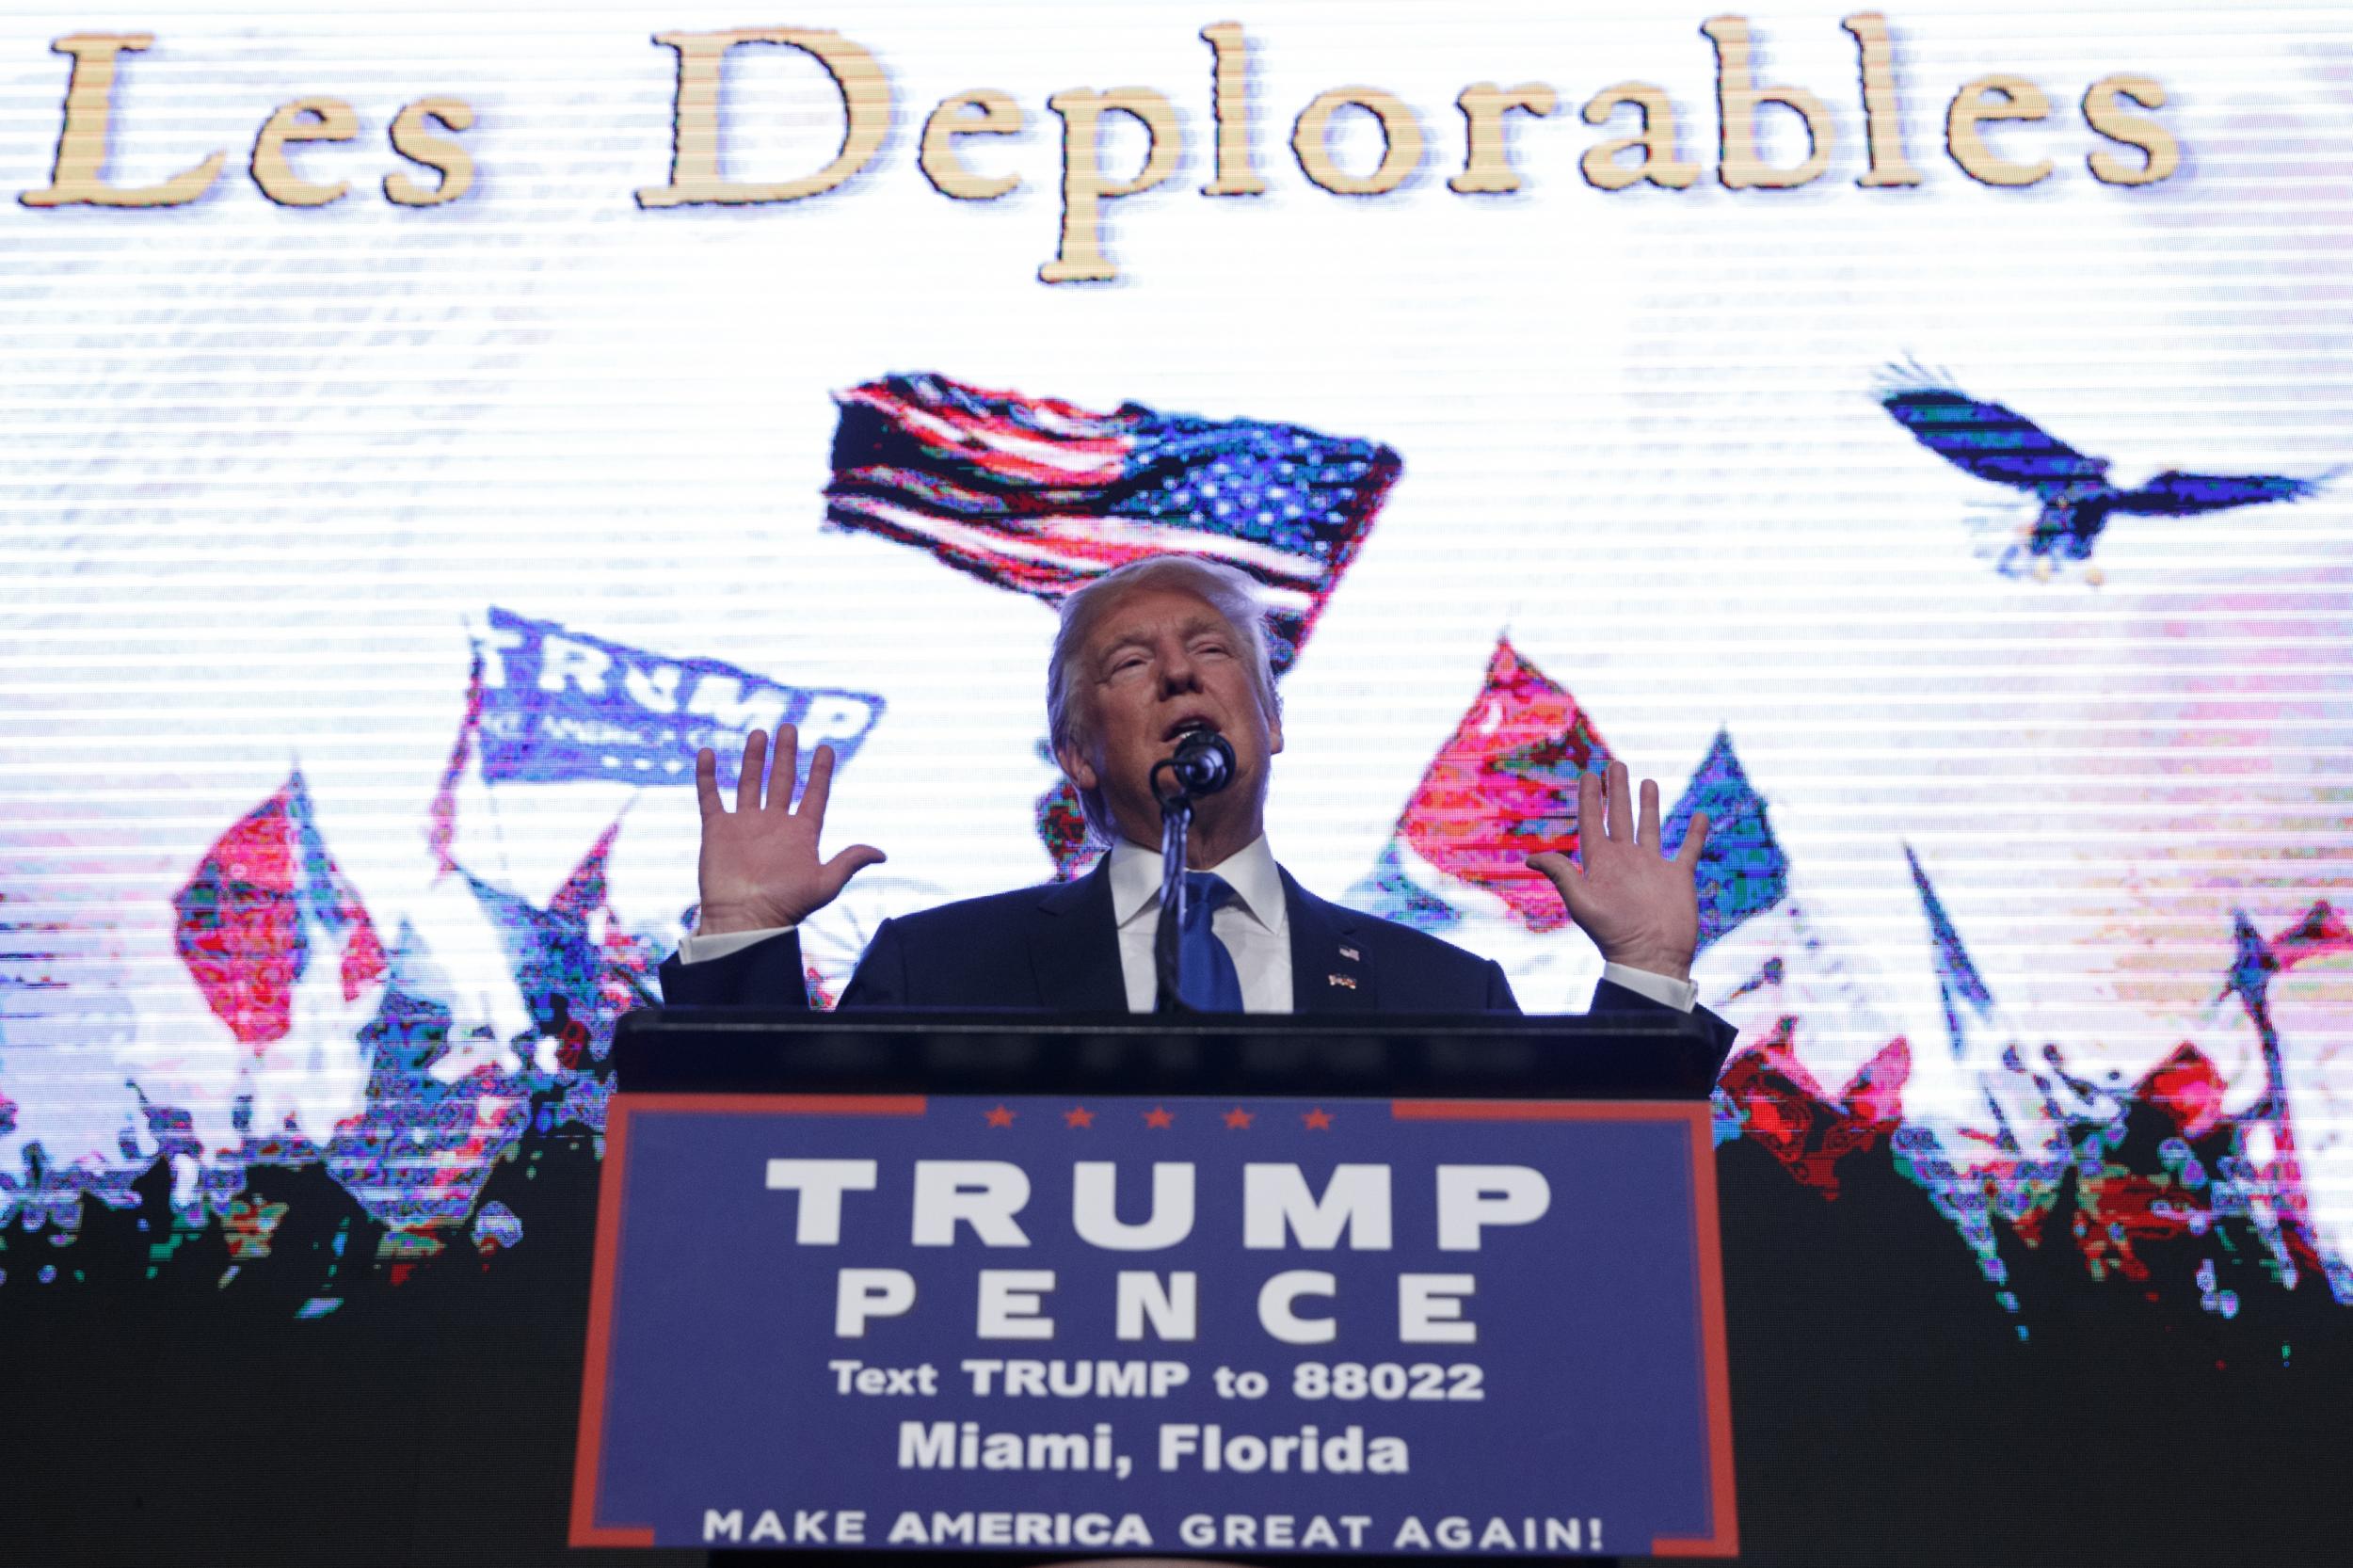 Trump campaigning in Miami earlier in September